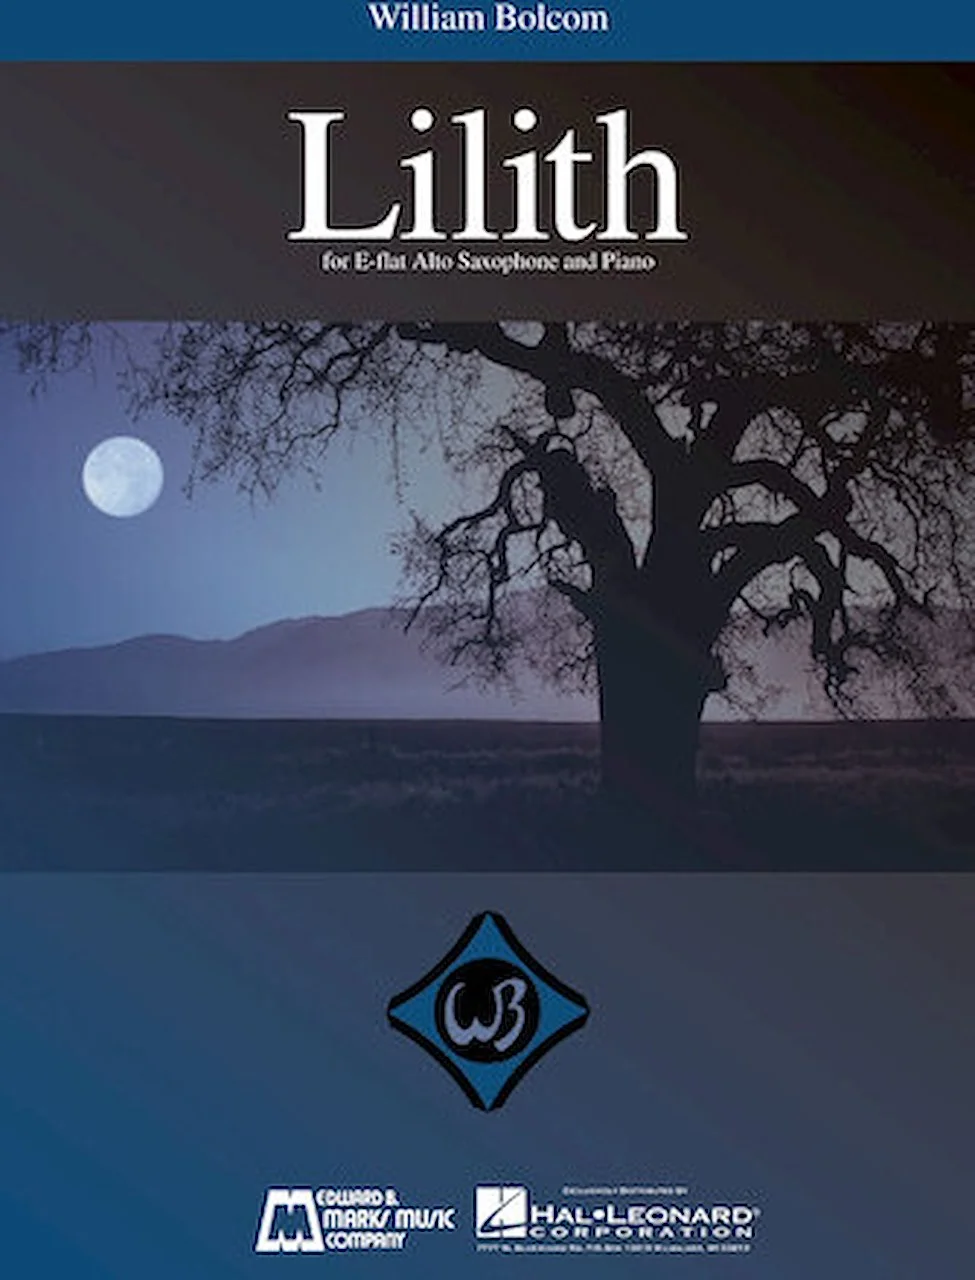 Lilith: for E-flat alto saxophone and piano